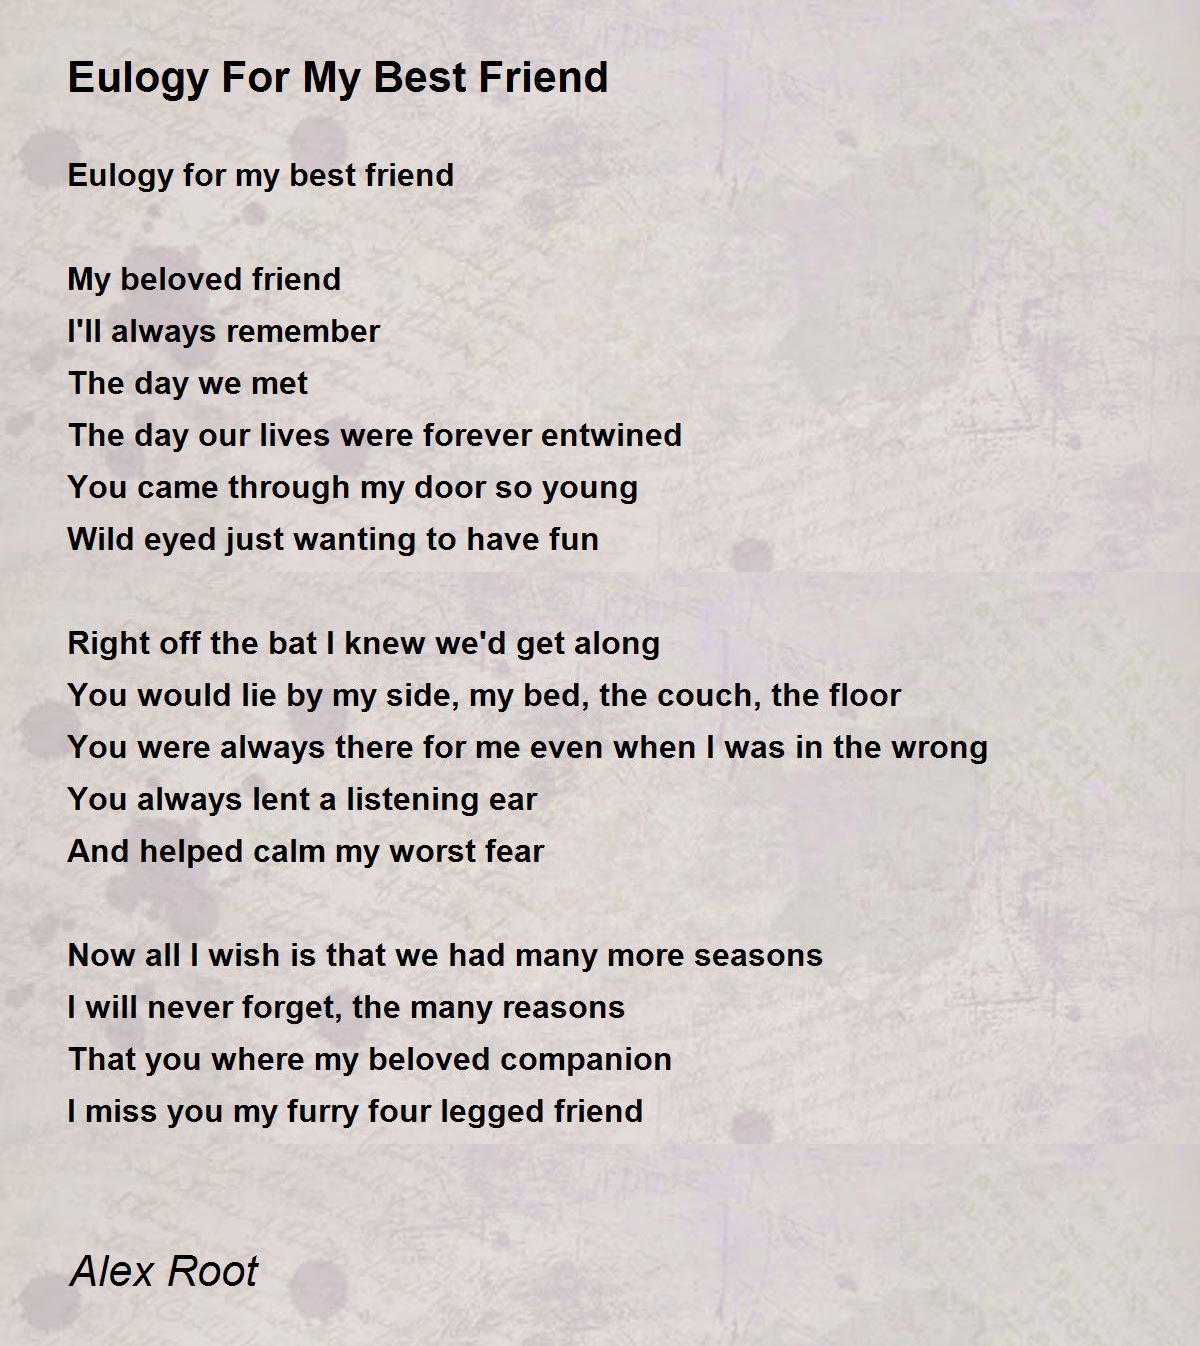 eulogy-for-my-best-friend-eulogy-for-my-best-friend-poem-by-alex-root